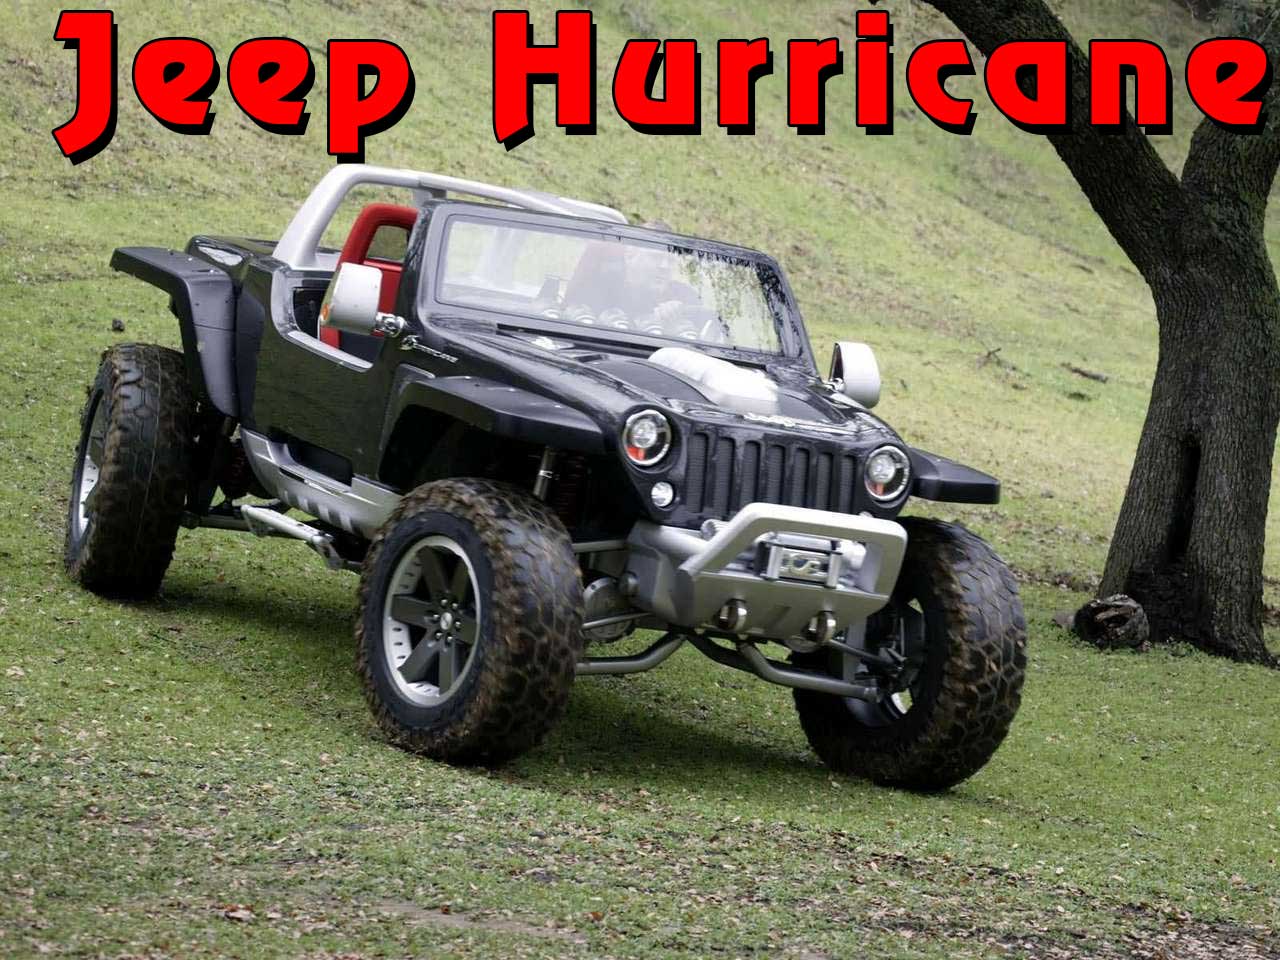 Terenowy huragan czyli Jeep Hurricane